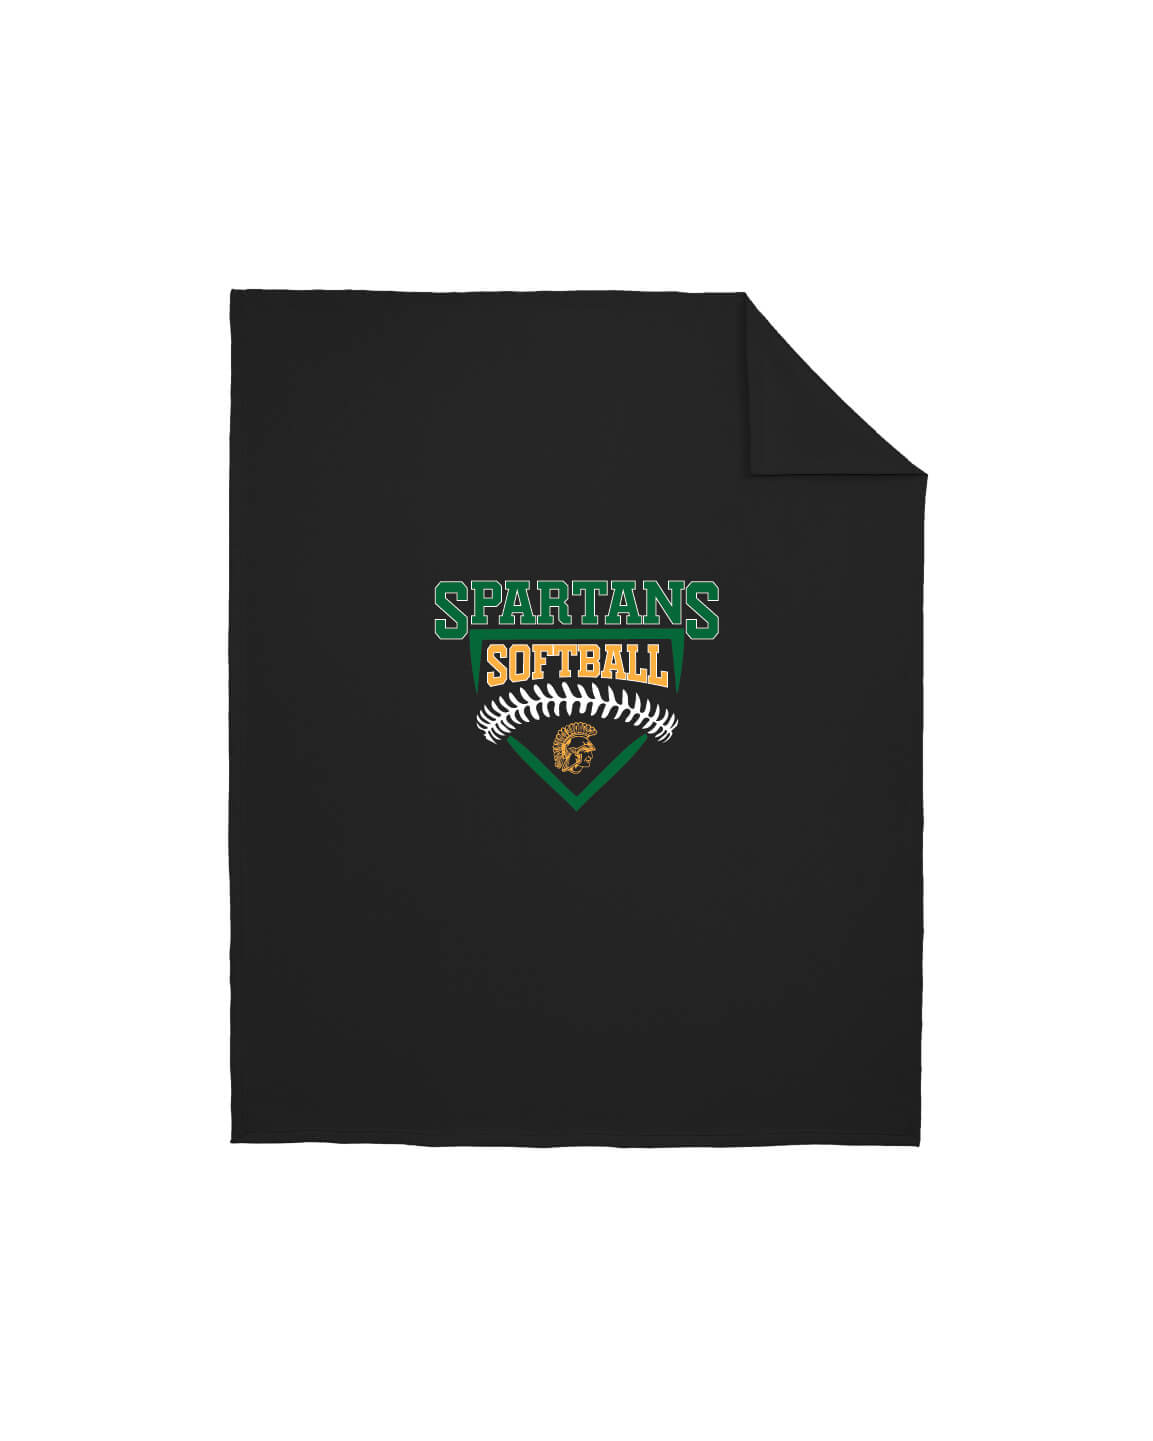 Spartans Softball Sweatshirt Blanket black